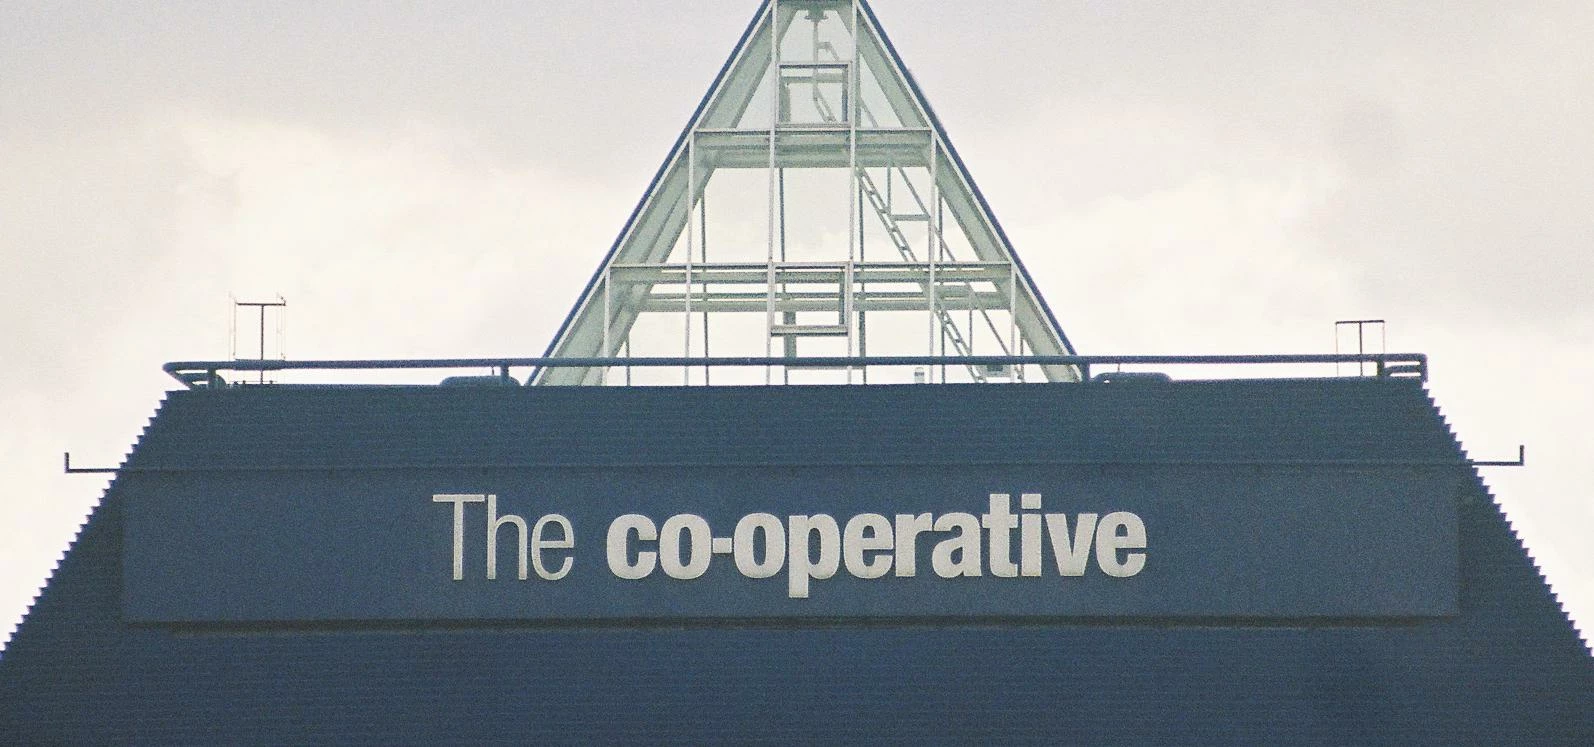 The co-operative pyramid